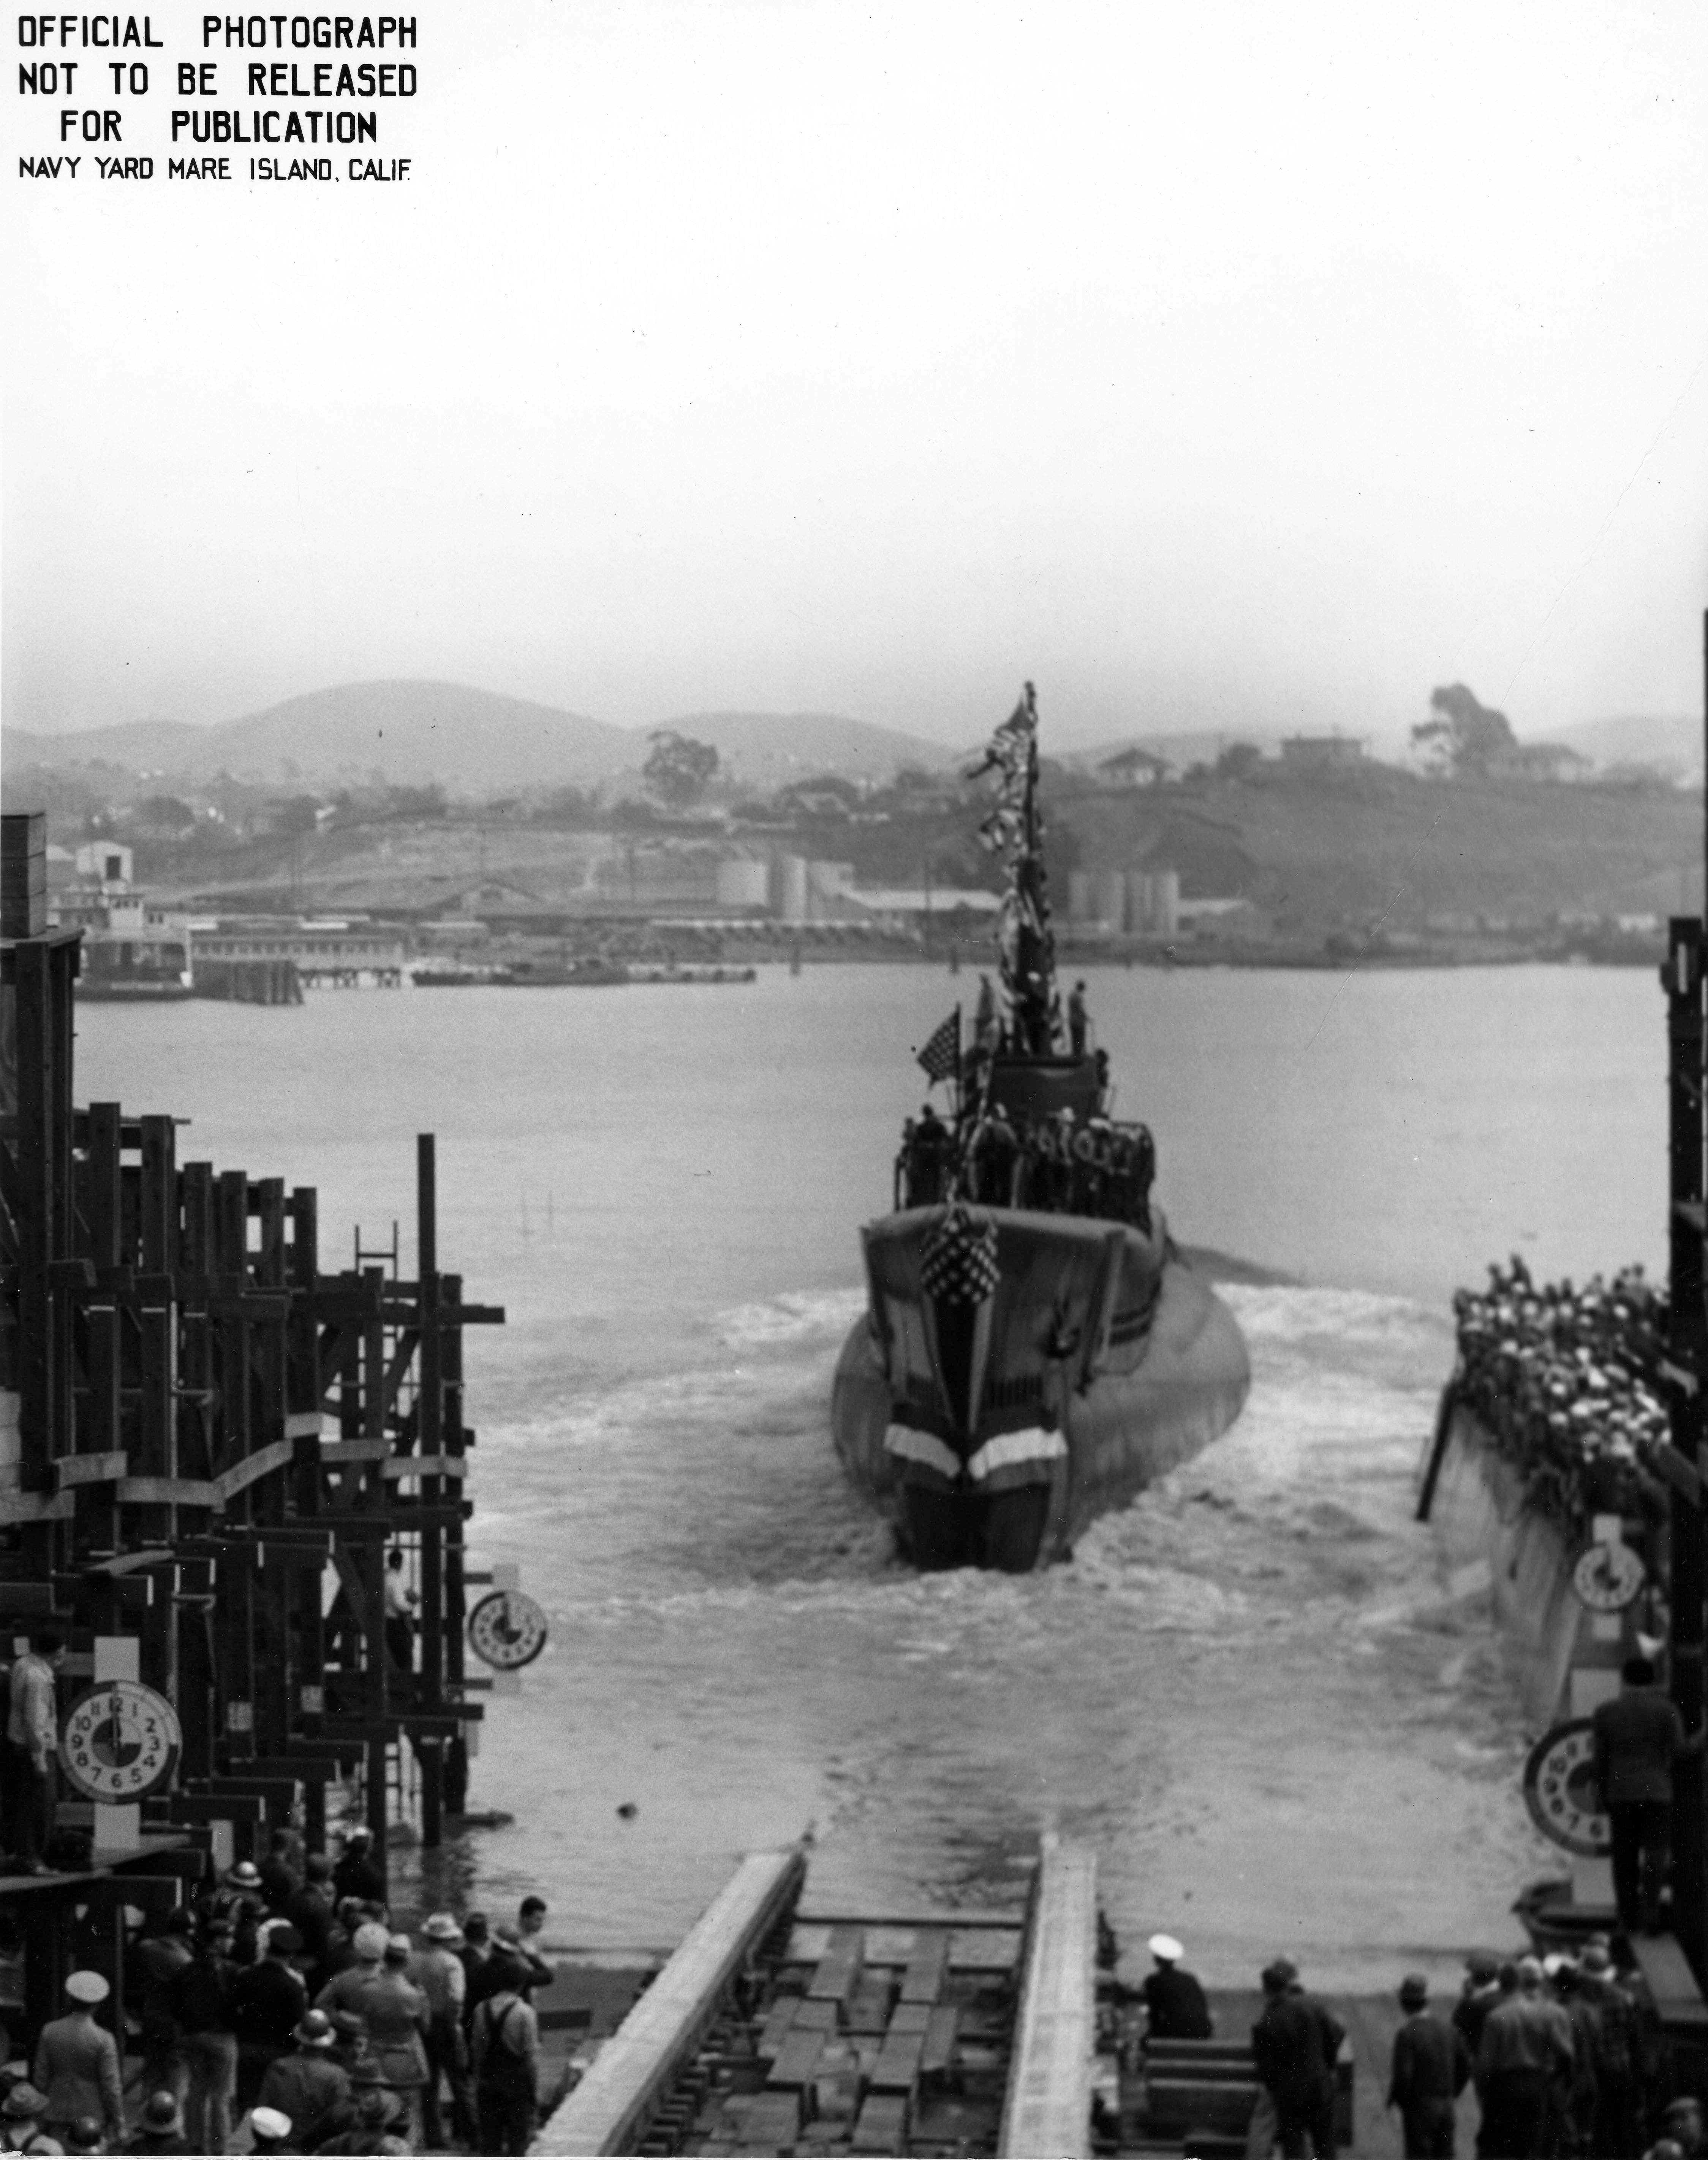 Launching of USS Trepang, Mare Island Naval Shipyard, California, United States, 23 Mar 1944